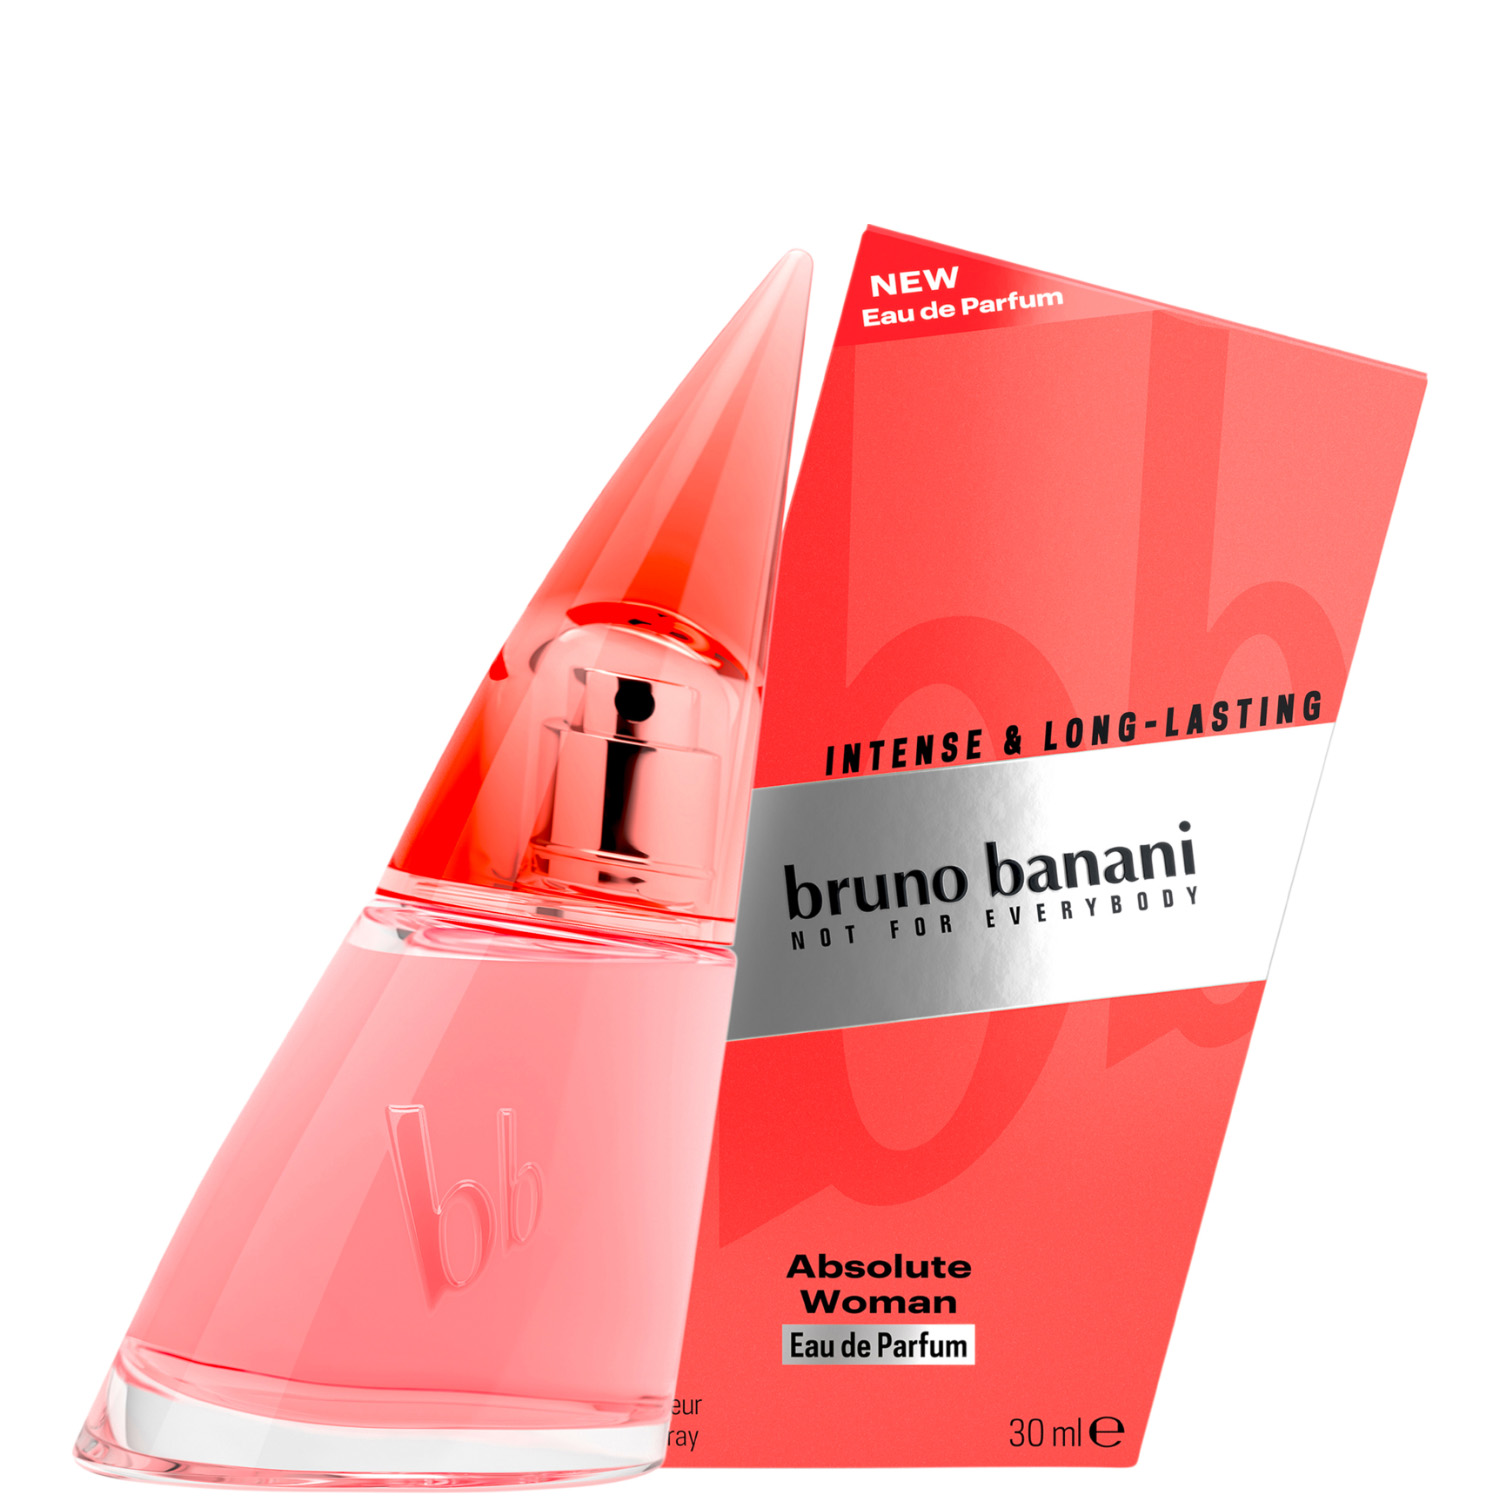 Bruno Banani Absolute Woman Eau de Parfum 30ml